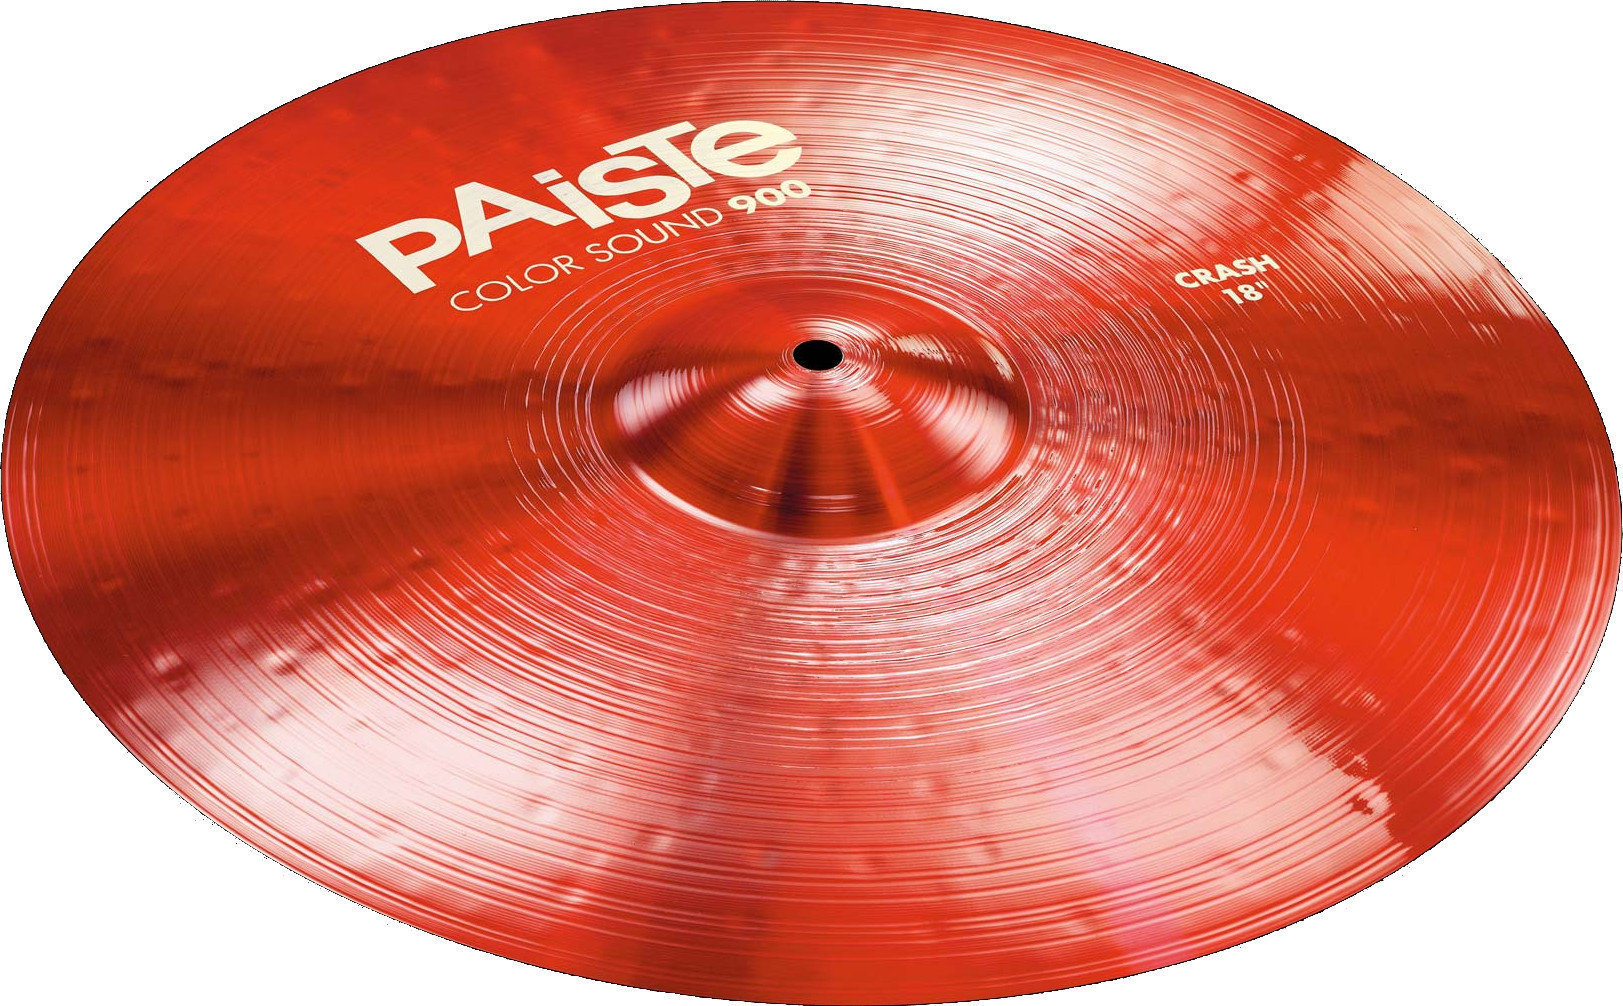 Cymbale crash Paiste Color Sound 900 Cymbale crash 19" Rouge